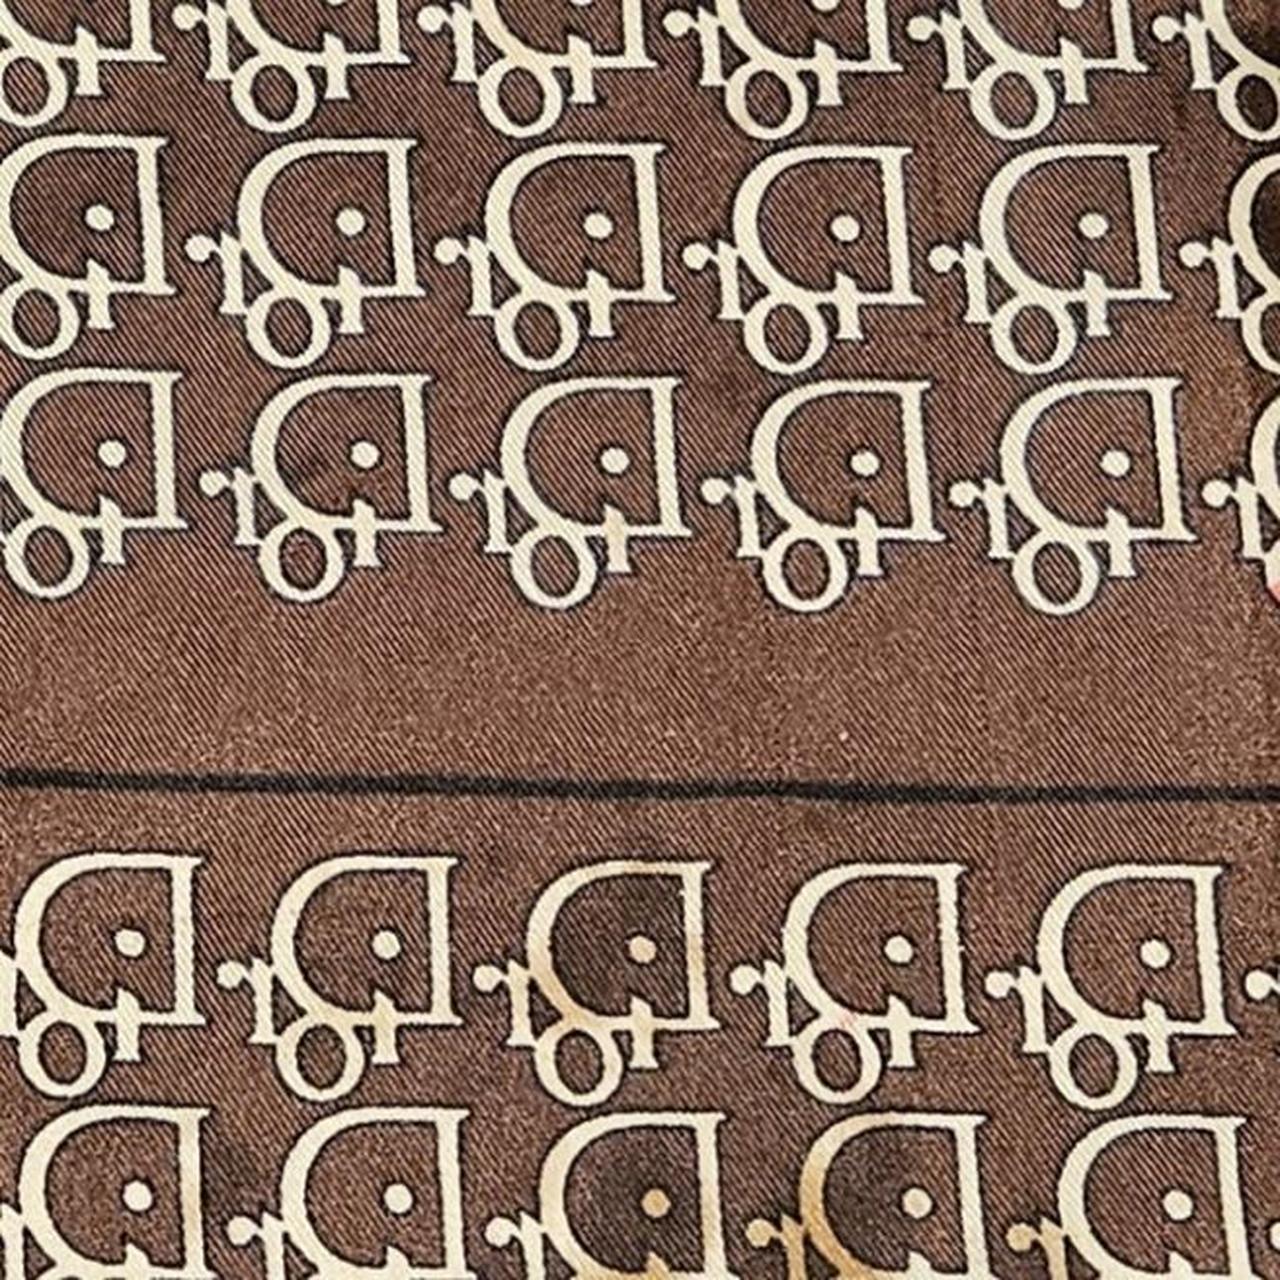 Dior silk Scarf in brown beige monogram 100% - Depop